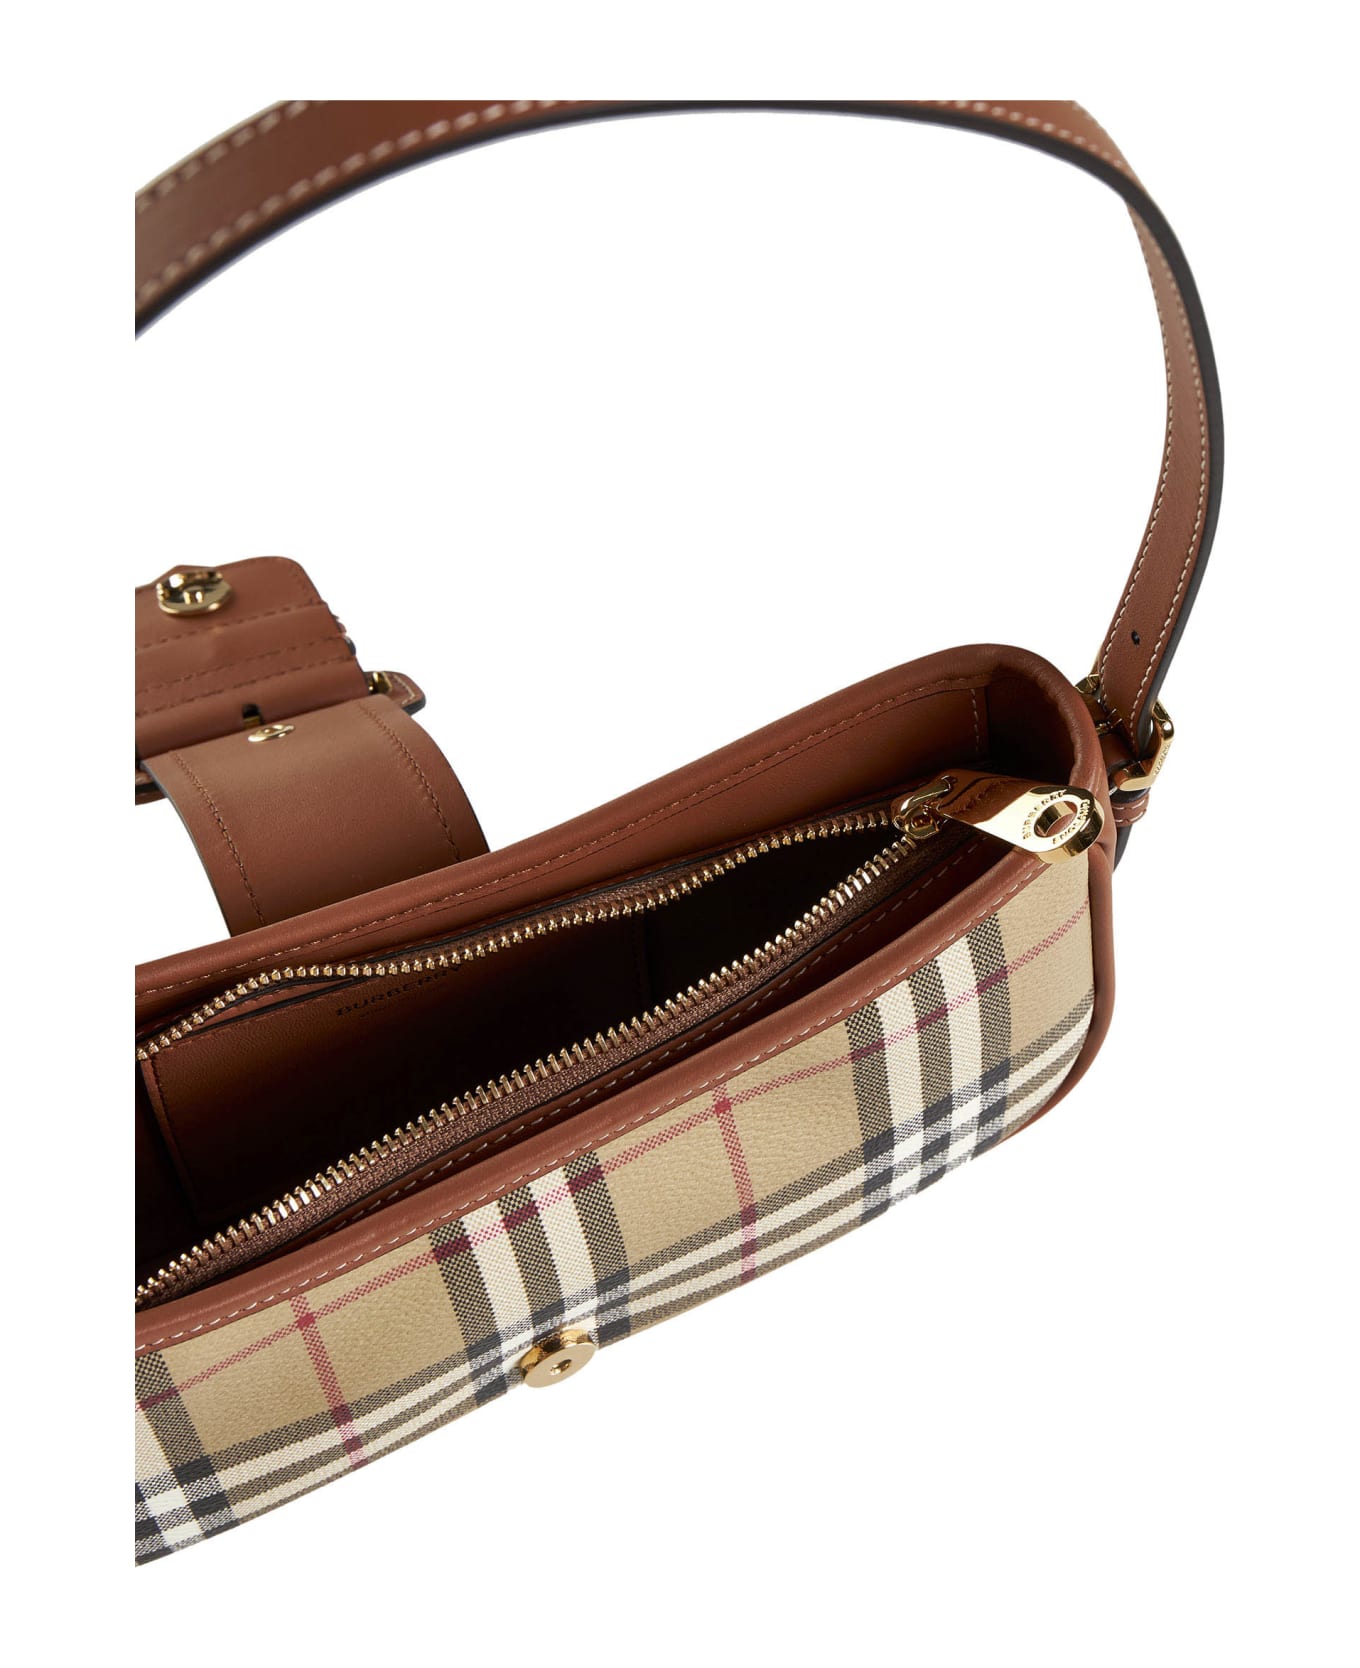 Burberry Shoulder Bag - Briar brown